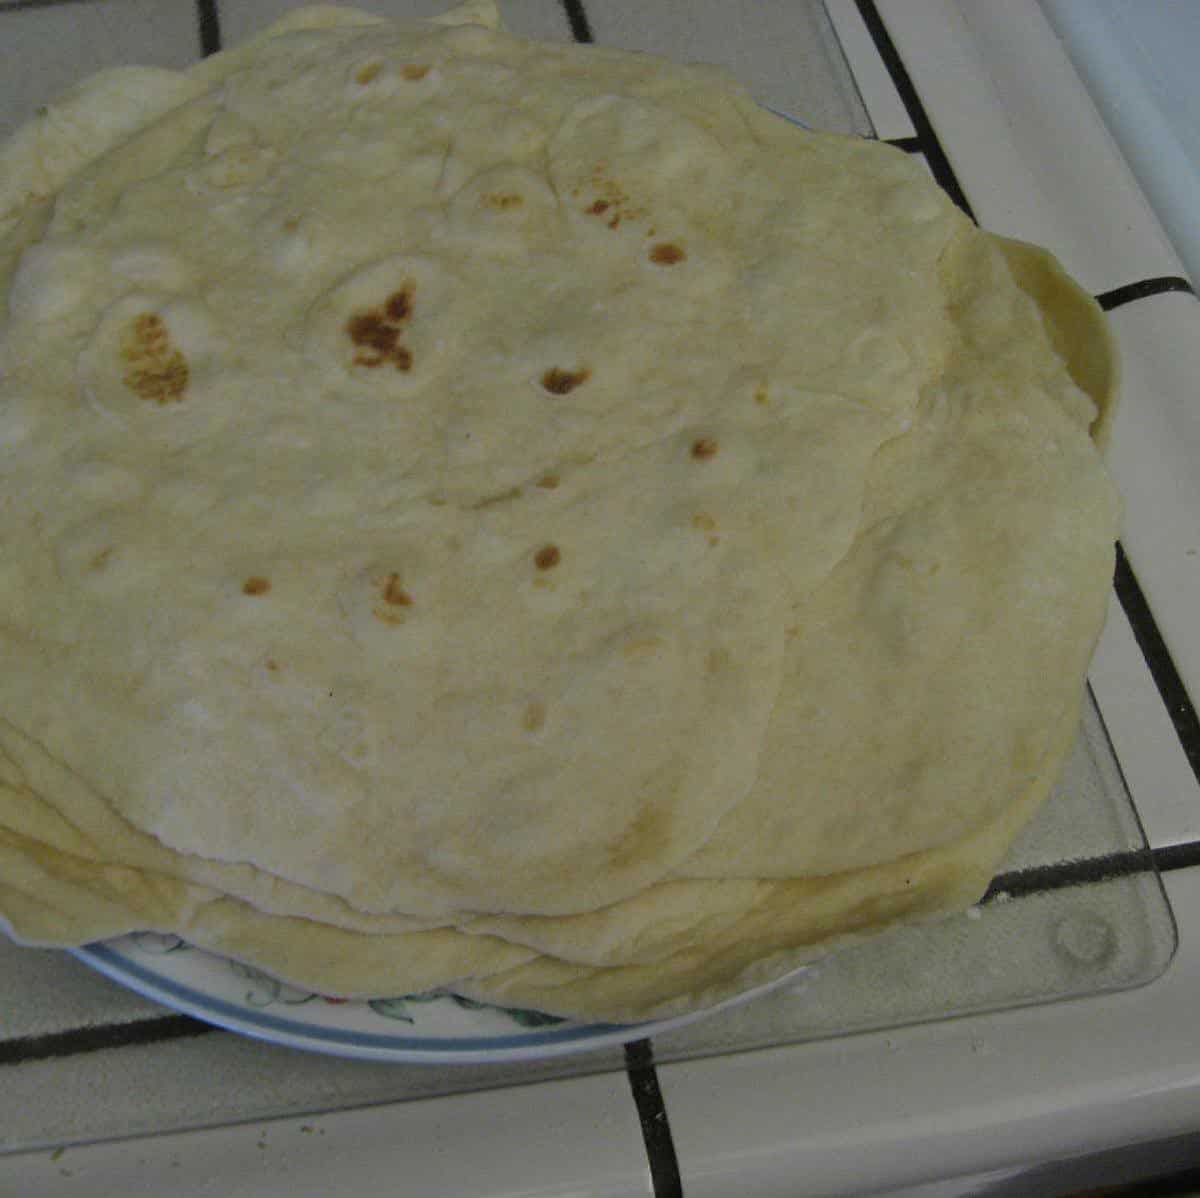  Watch the dough transform into delicious flour tortillas with this recipe!